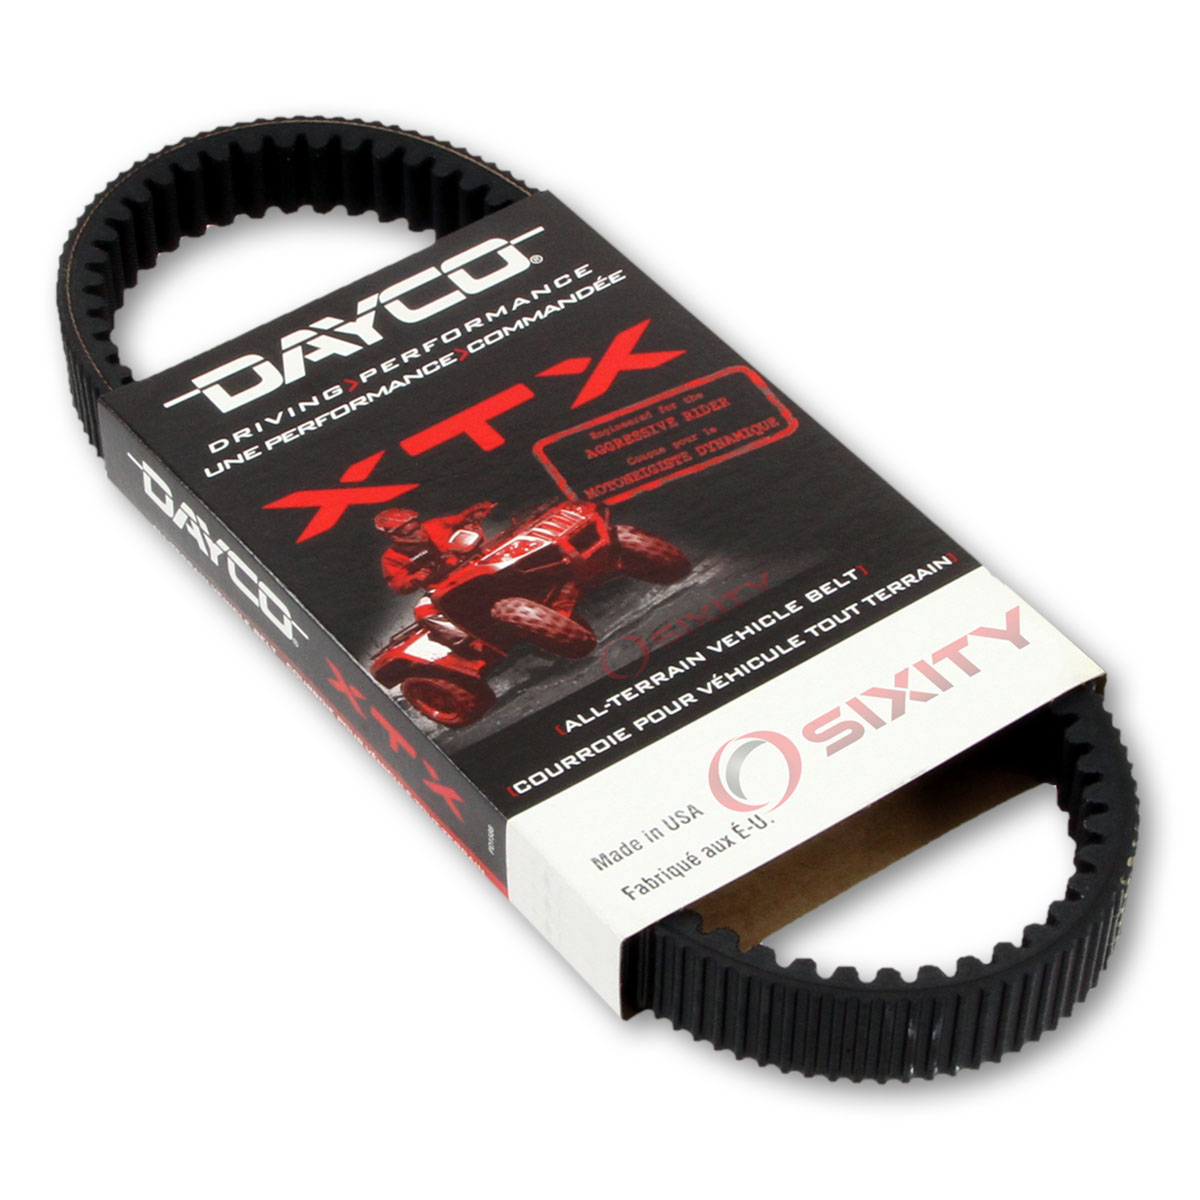 Dayco XTX Drive Belt for 2013 Arctic Cat 400 Core - Extreme Torque CVT